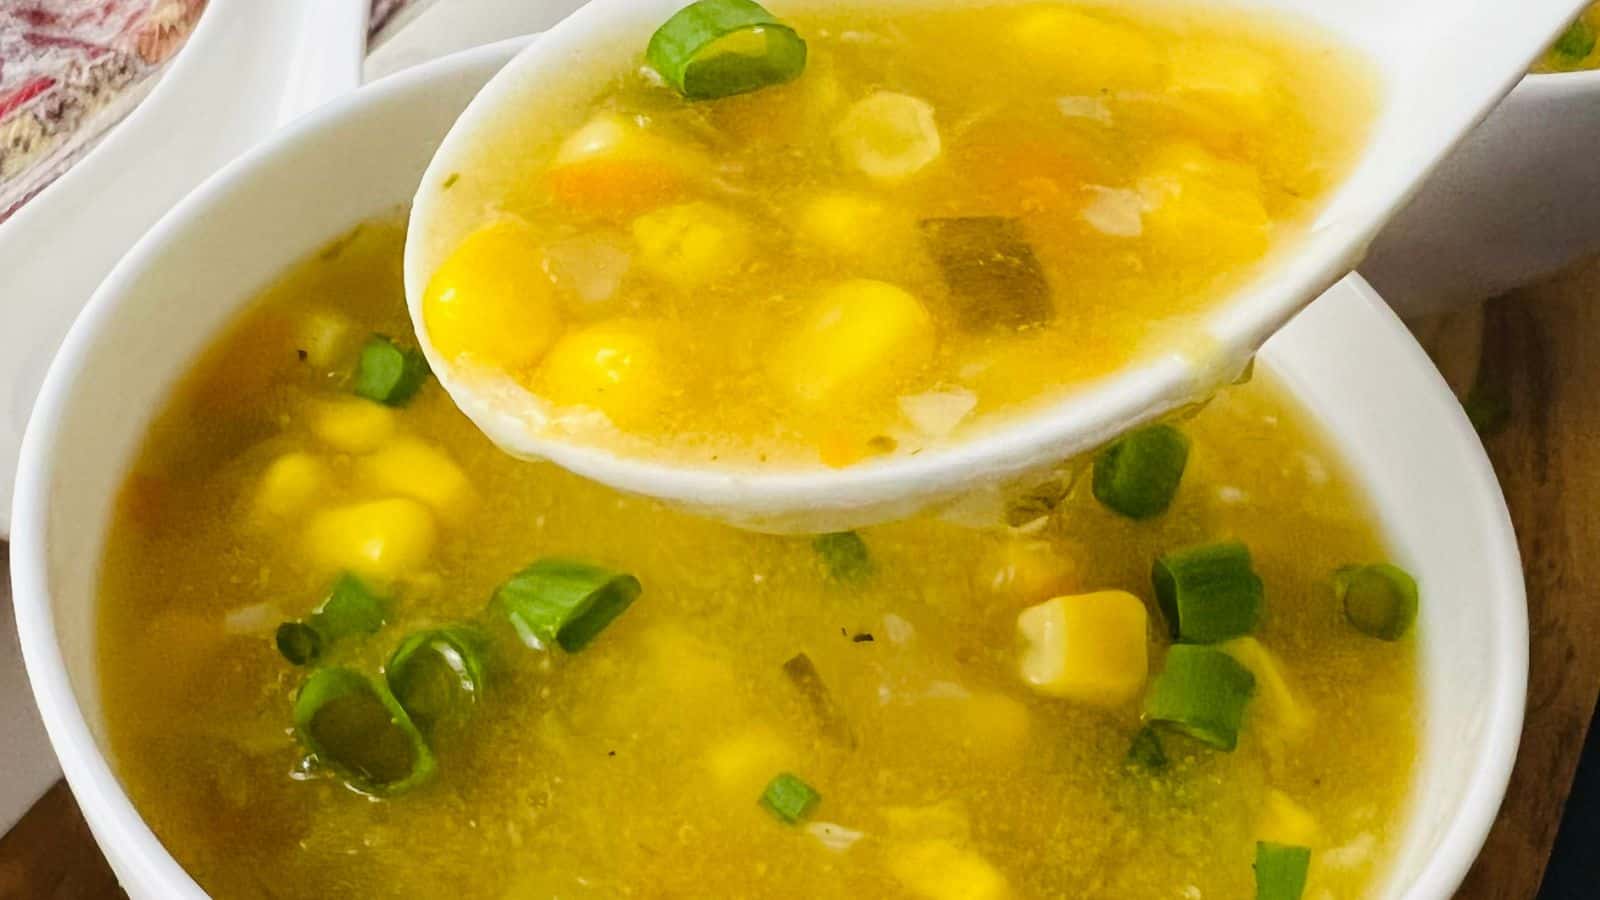 Sweet corn soup in white bowl.